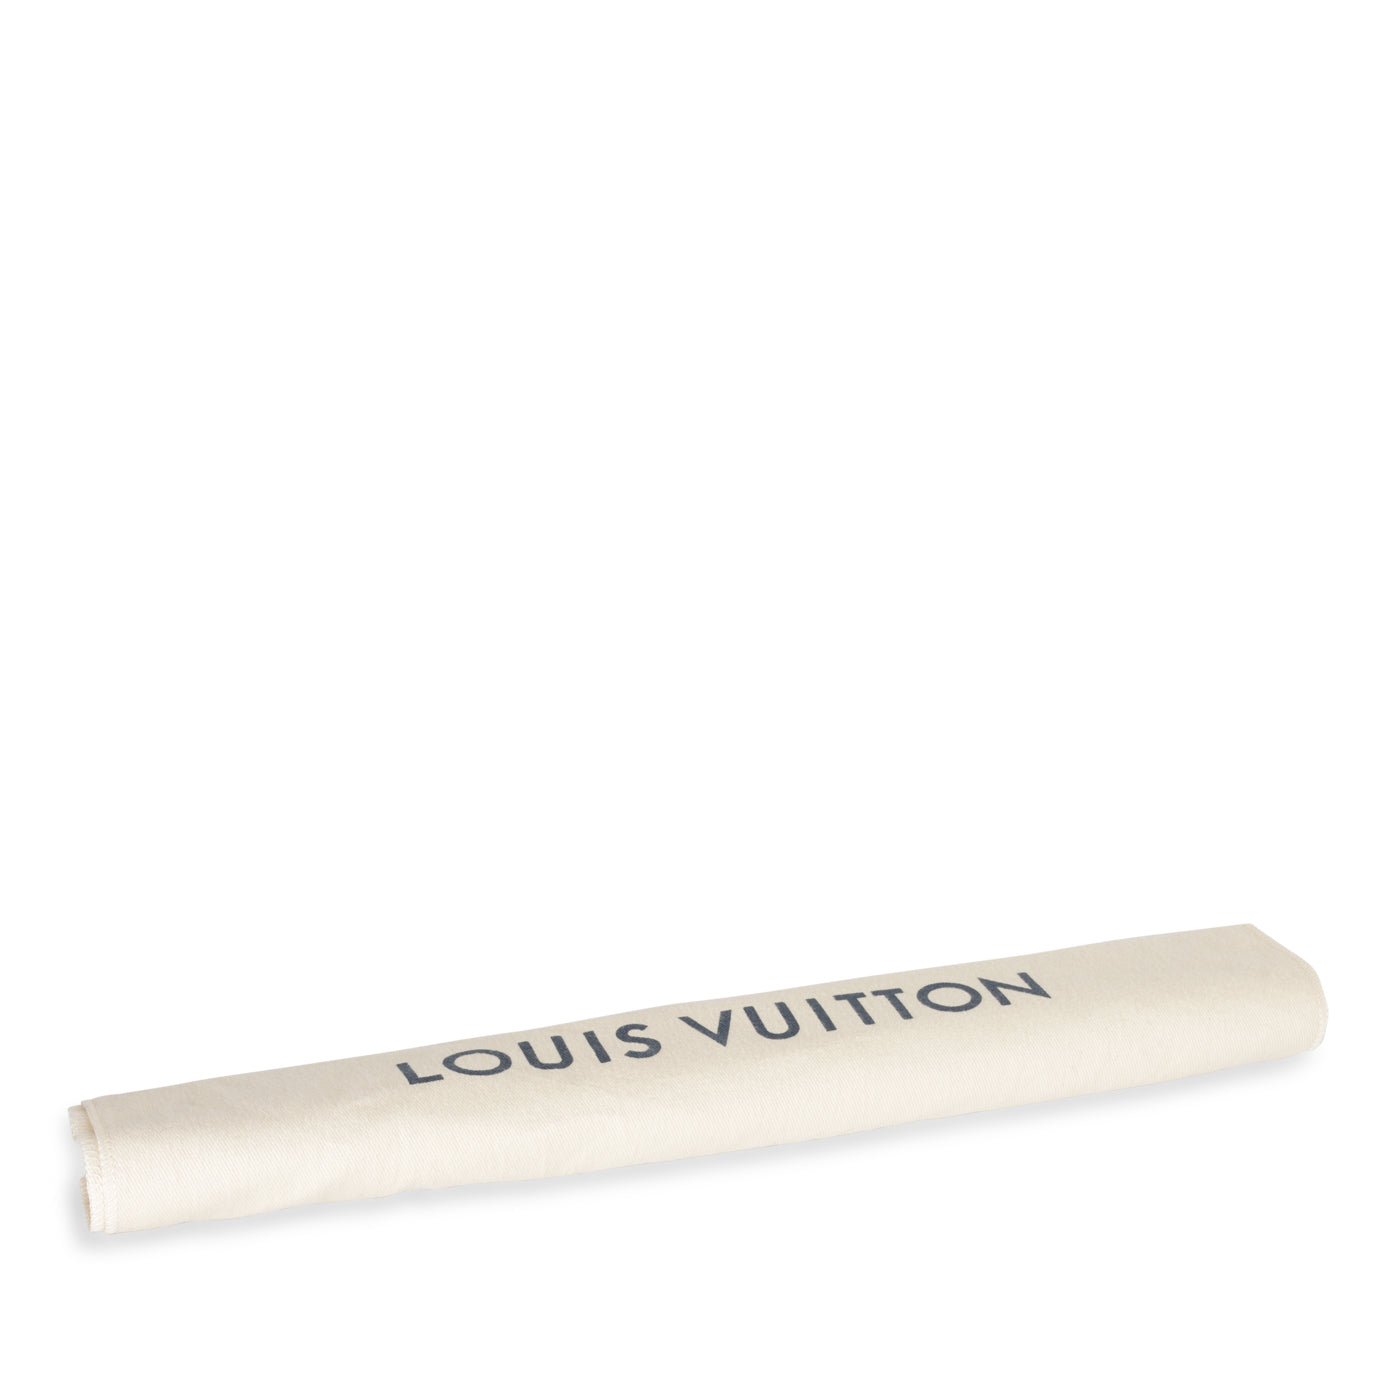 Shop Louis Vuitton 2022 SS 3 watch case (N41137, M47530, M43385) by Chaos3